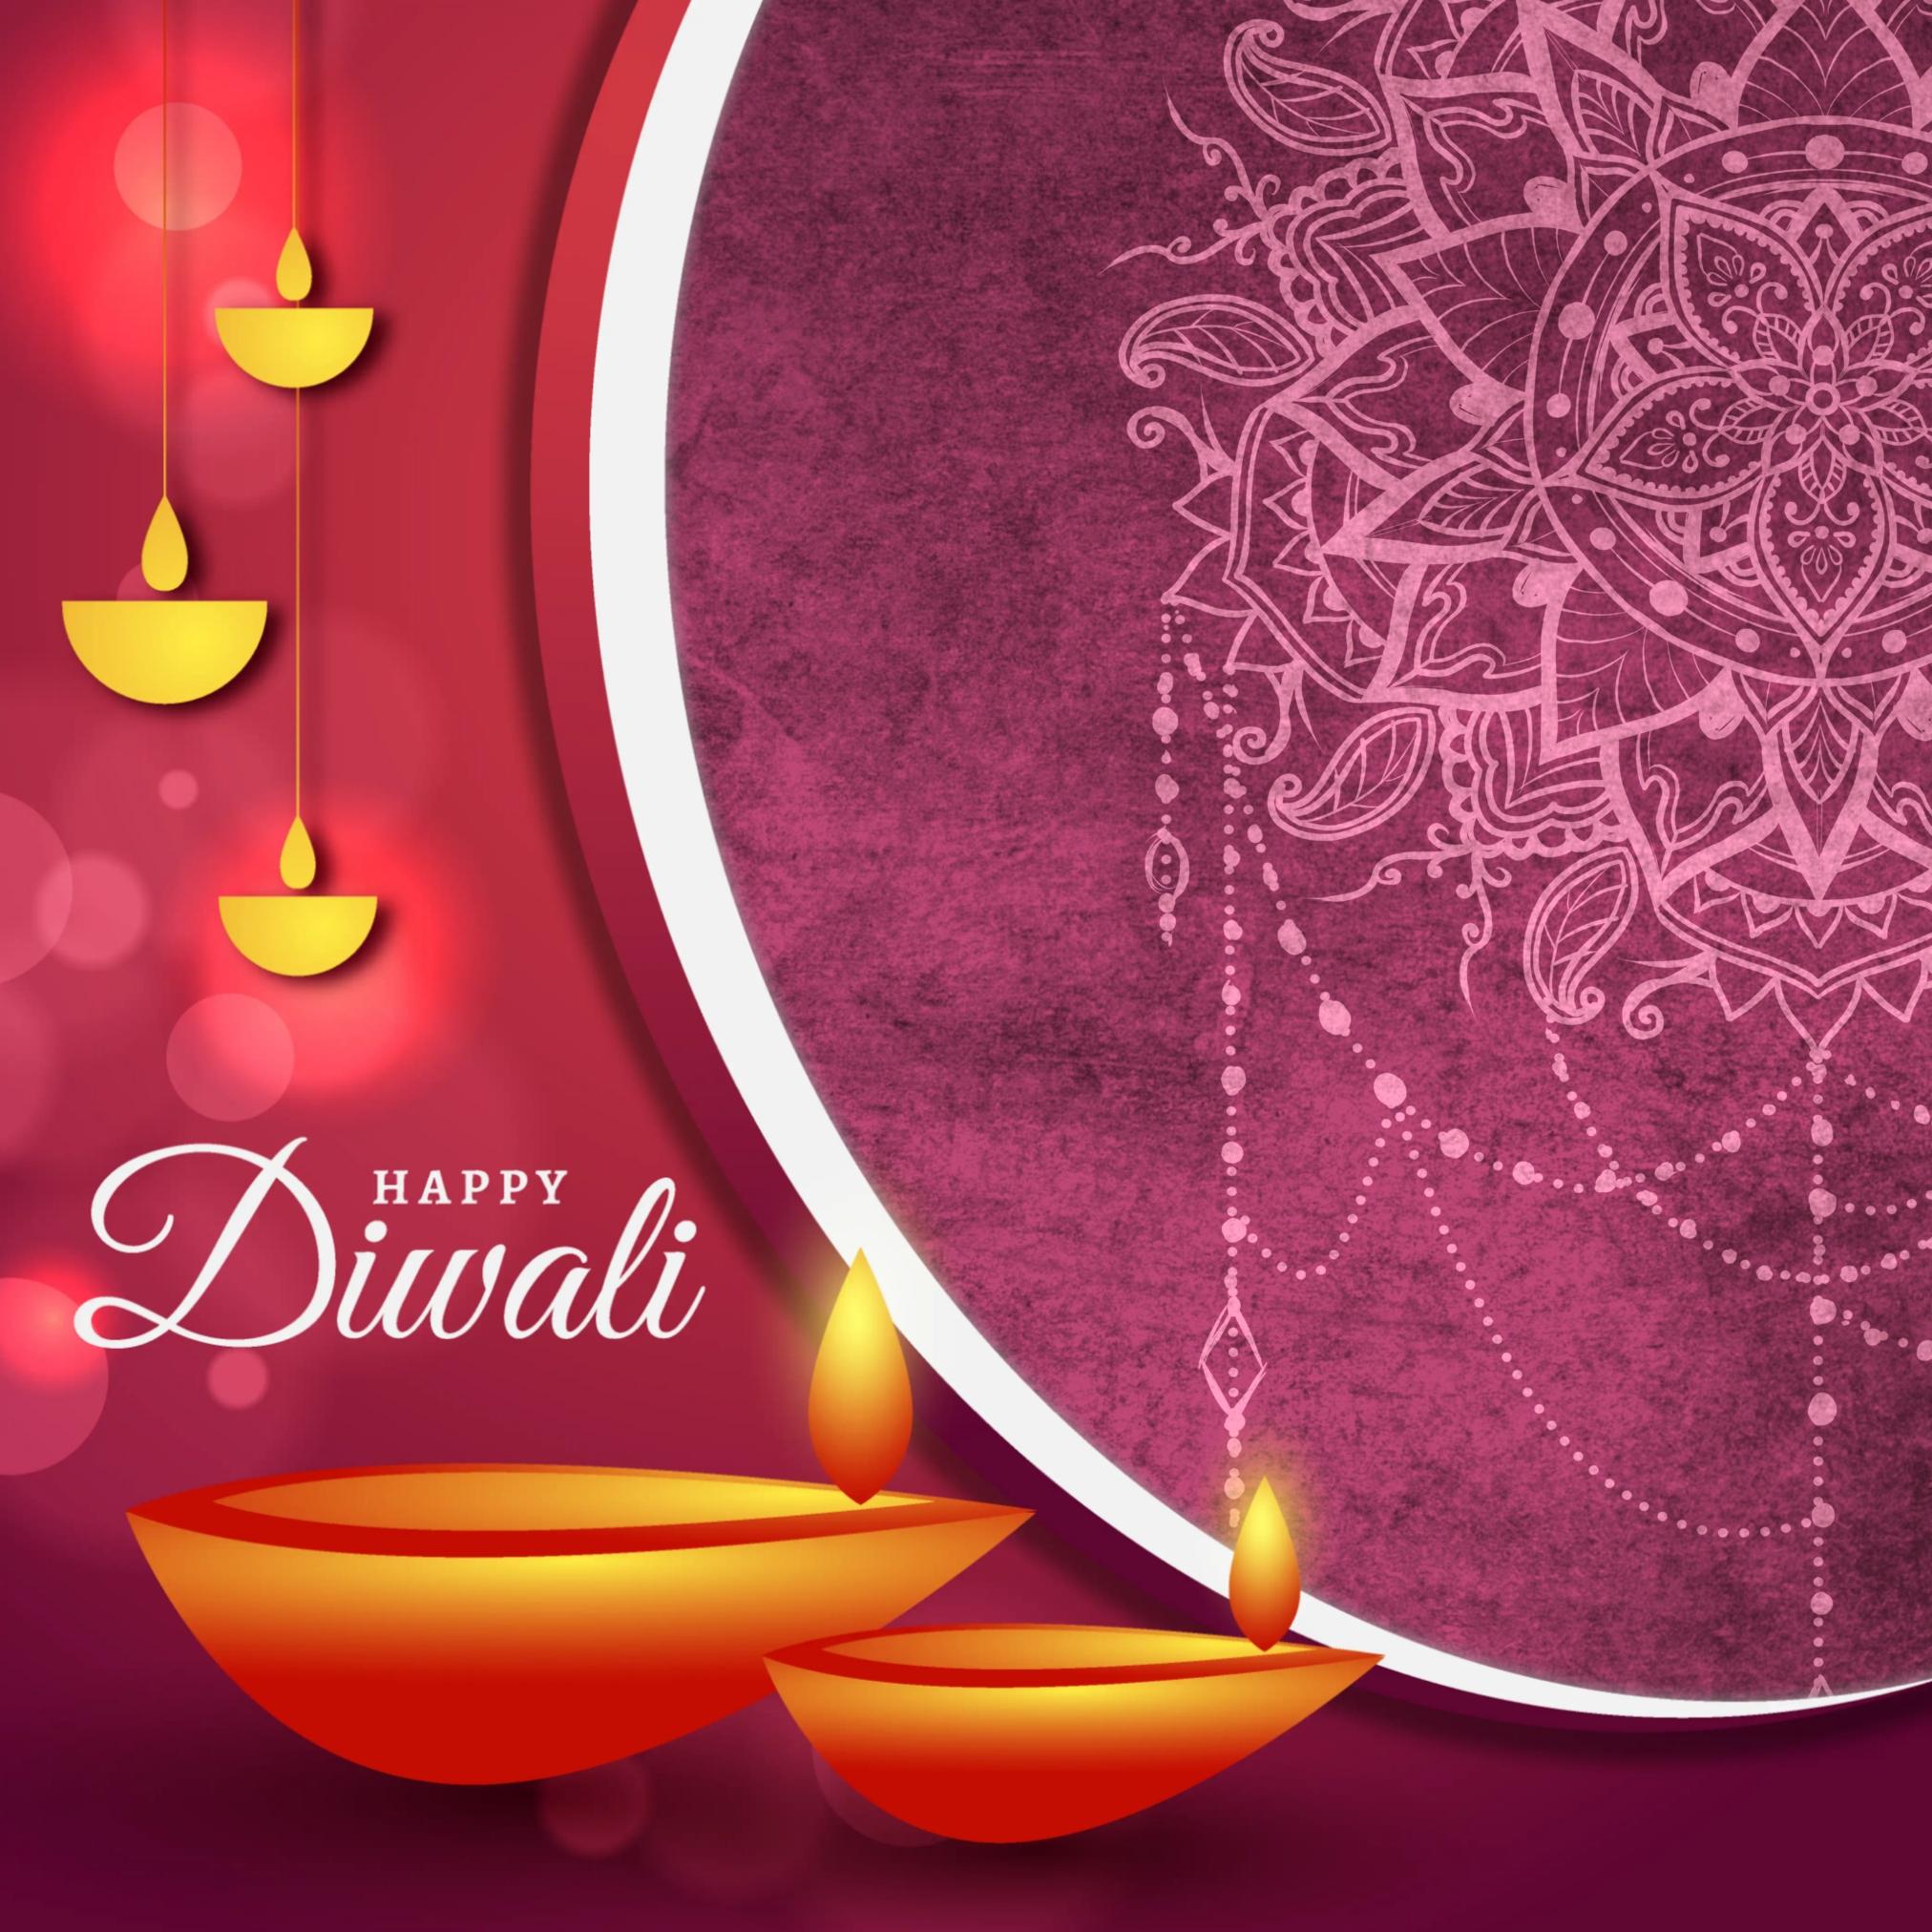 Happy Diwali Hd Images